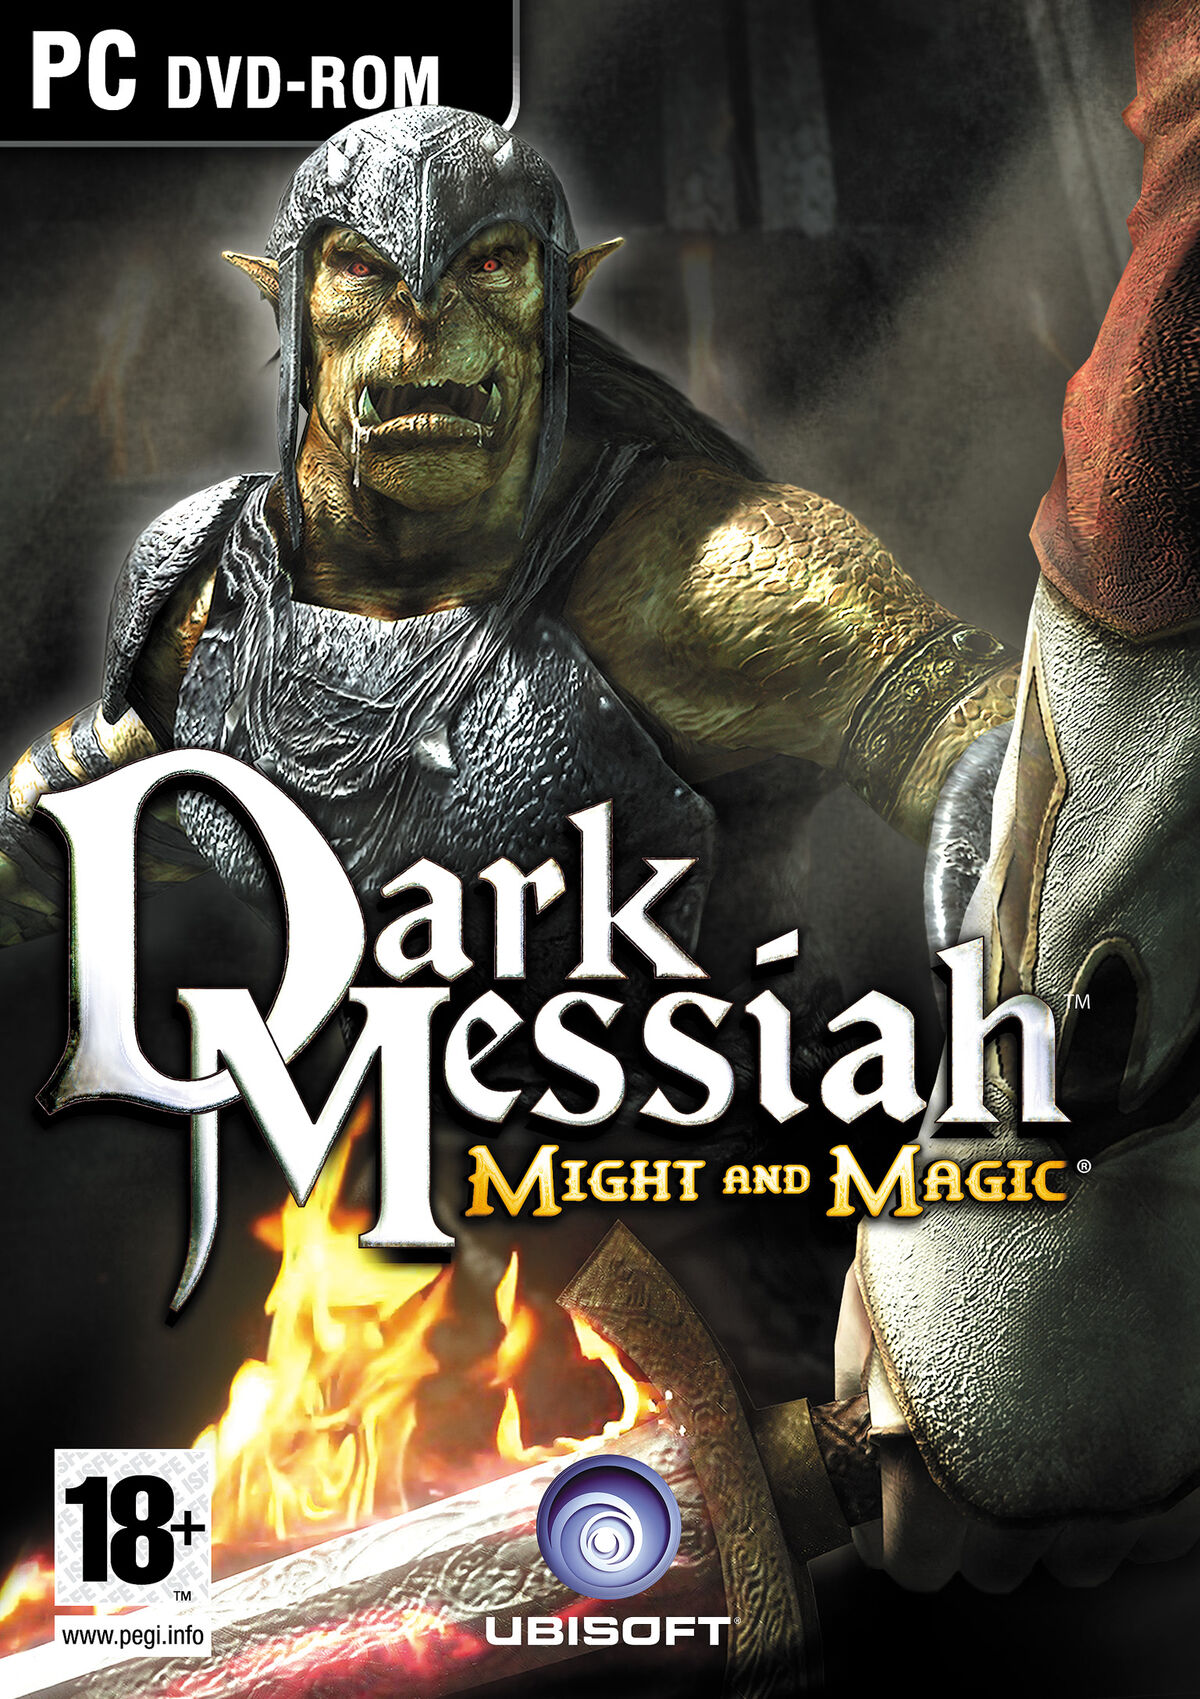 Dark messiah of might игра. Dark Messiah of might and Magic. Dark Messiah 2. Тёмный Мессия меча и магии.